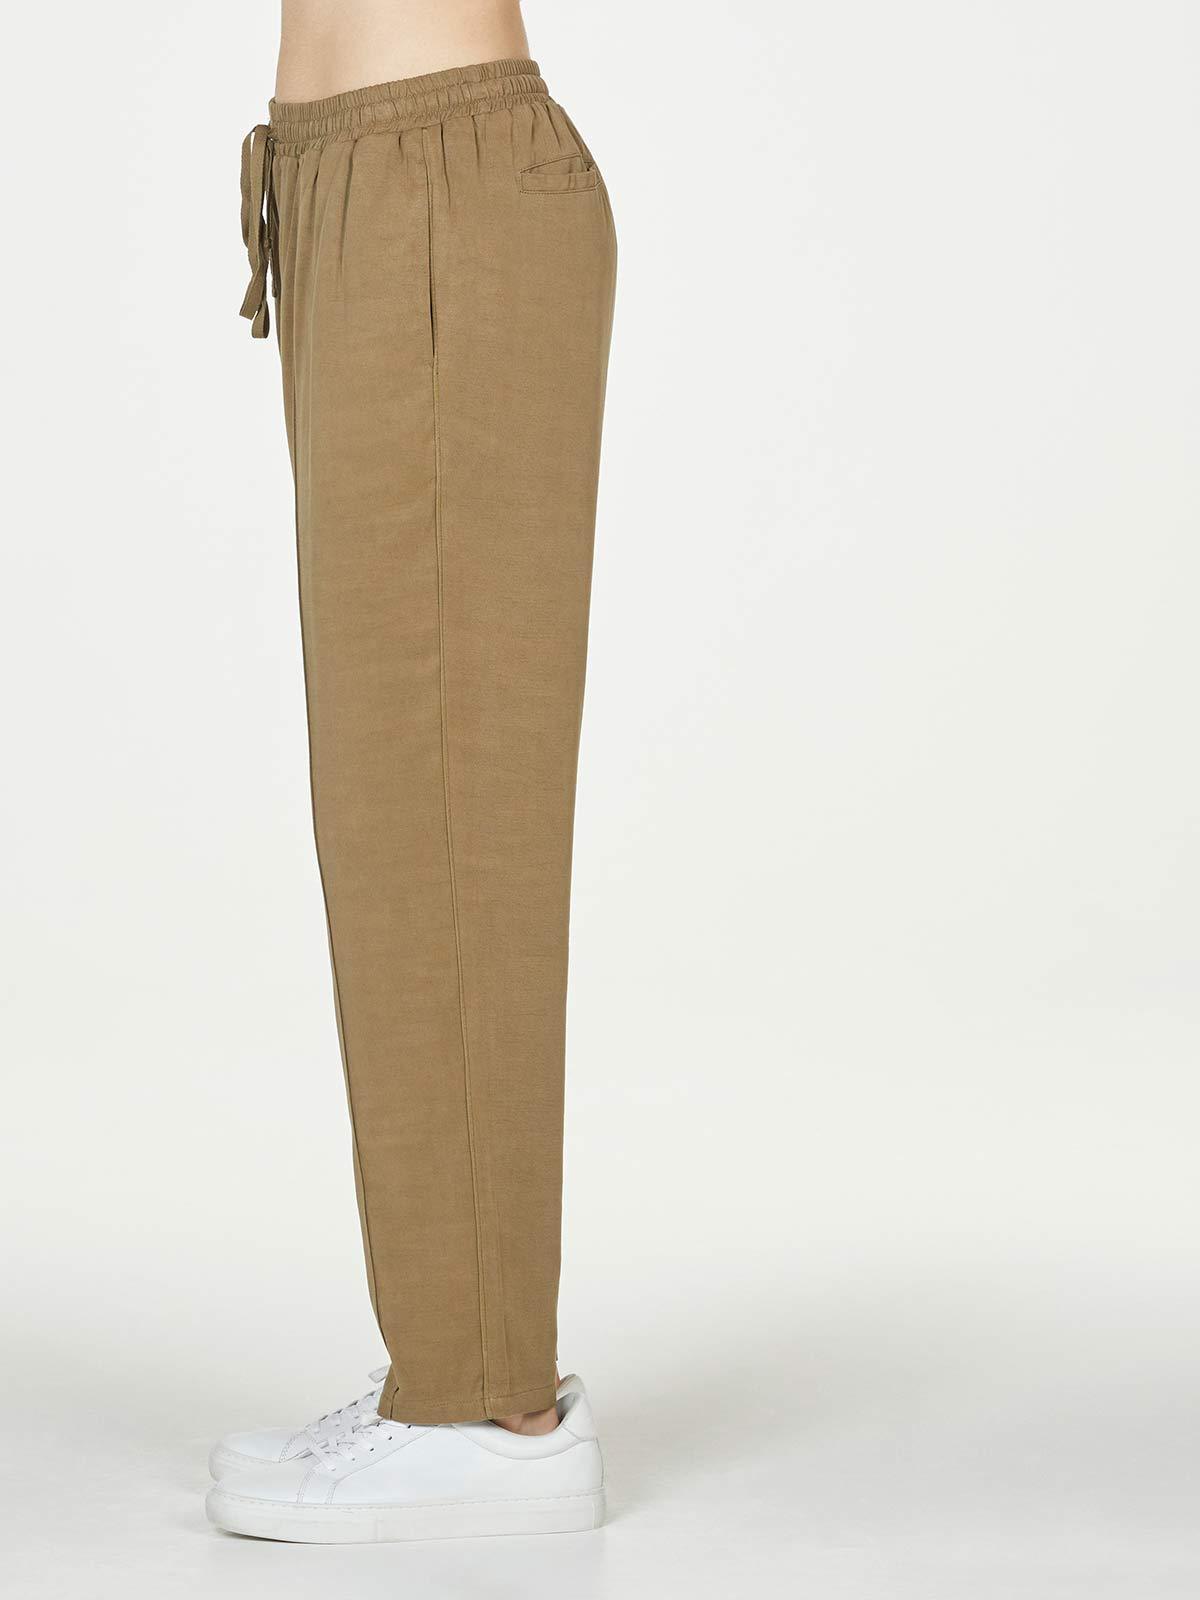 Balance Bamboo Yoga Pants (Navy) | Bamboo Clothing